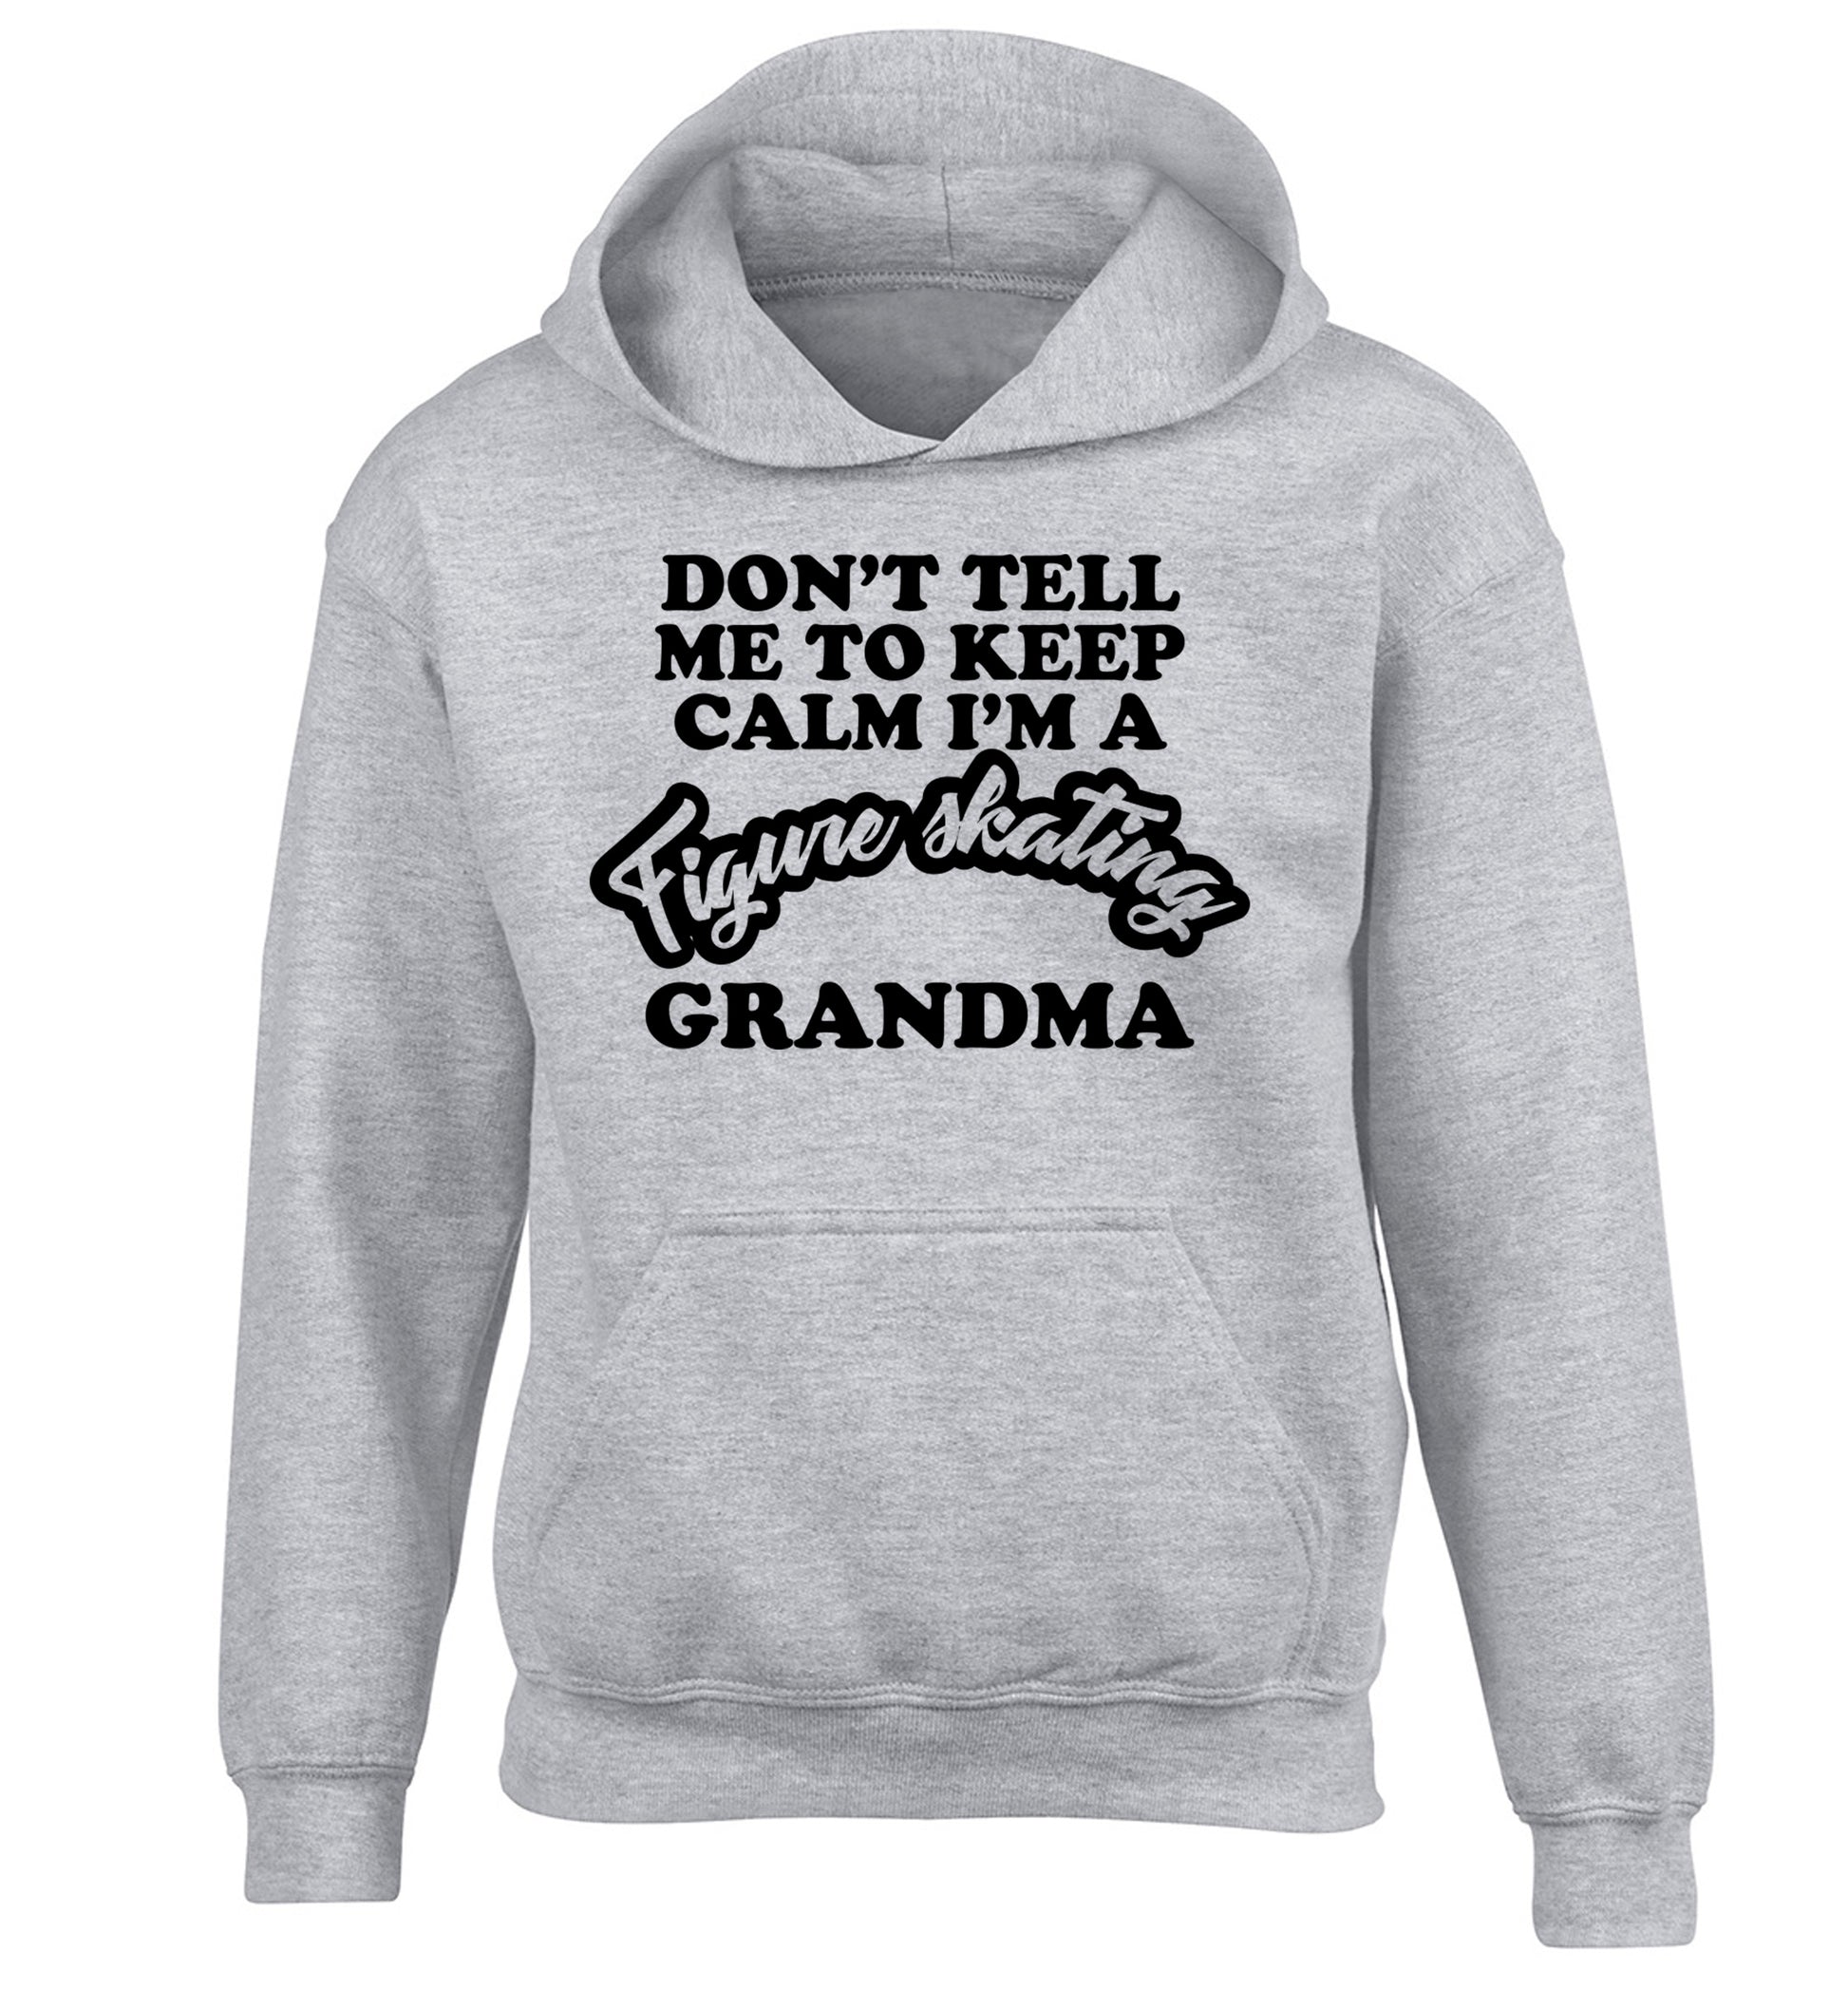 Don't tell me to keep calm I'm a figure skating grandma children's grey hoodie 12-14 Years